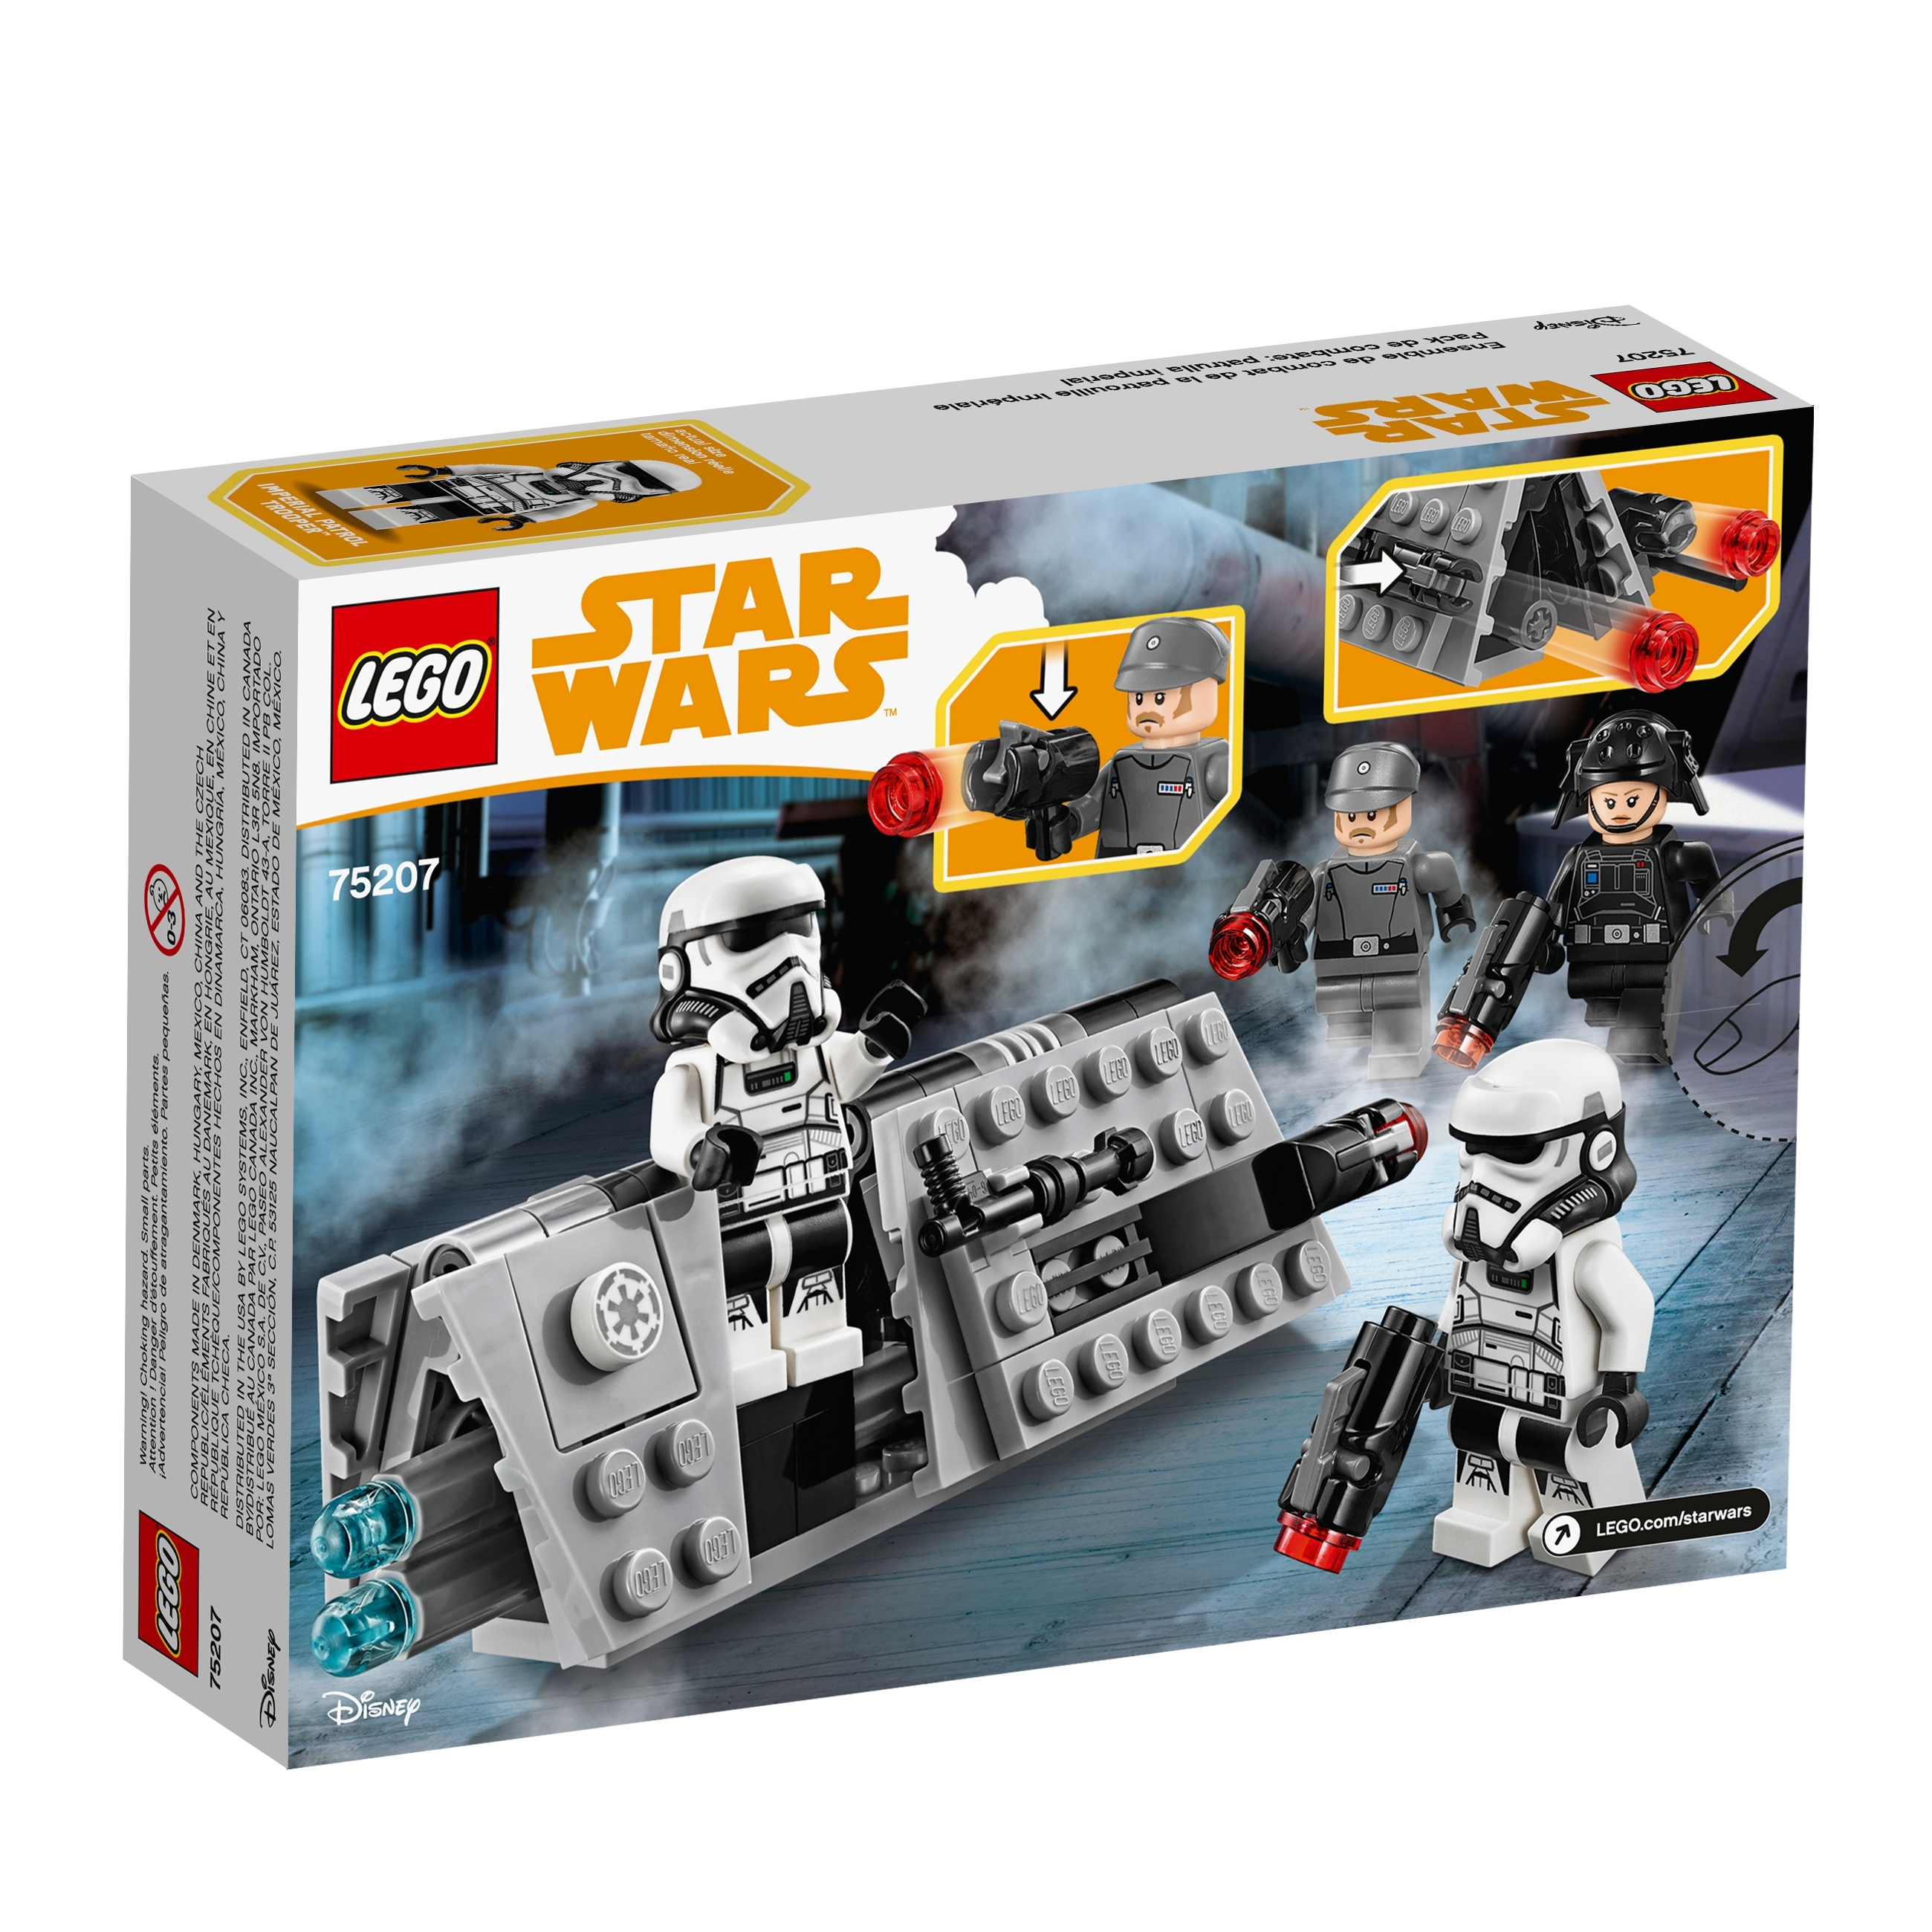 NEW Lego Star Wars Imperial Patrol Trooper Minifigure 75207 